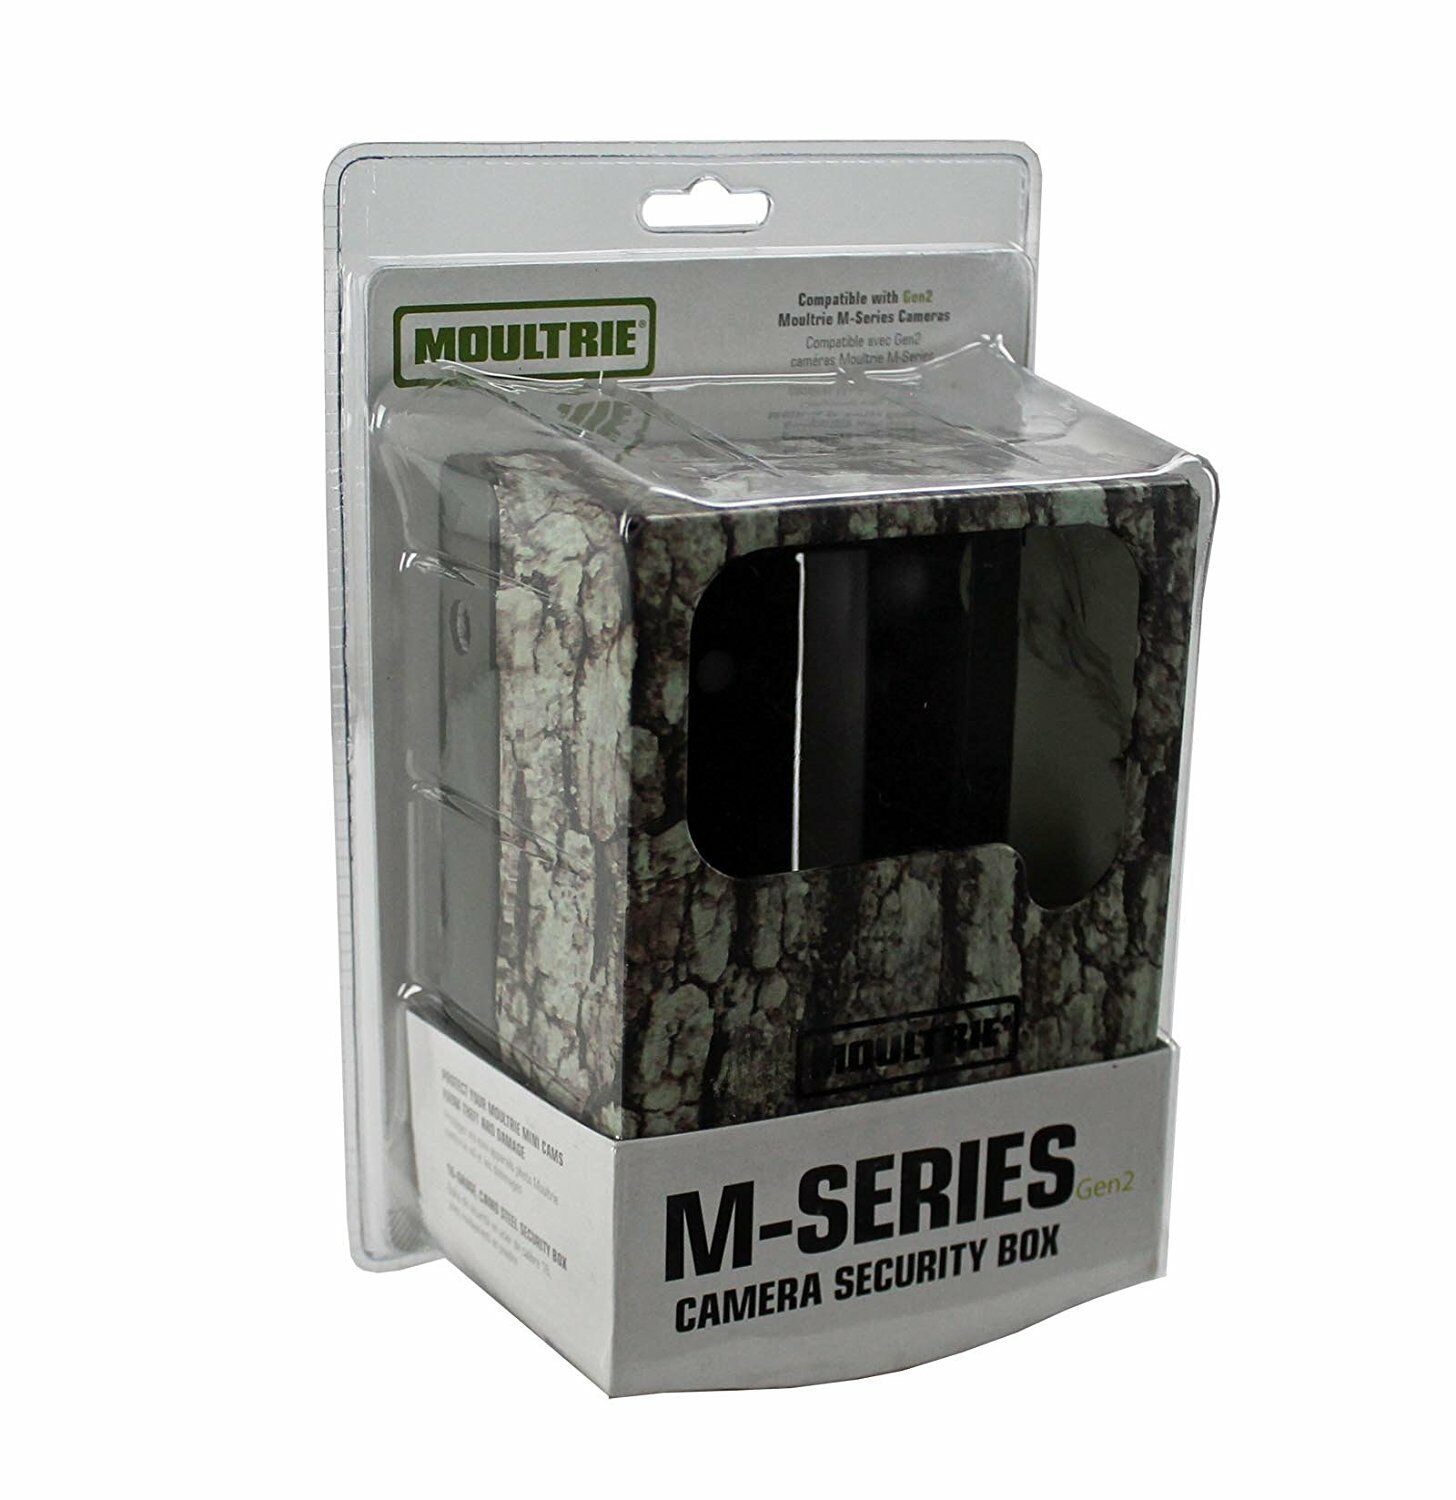 Moultrie Trail Camera Security Bear Box Fits Gen 2 M-990i M-880i M-880 M-550